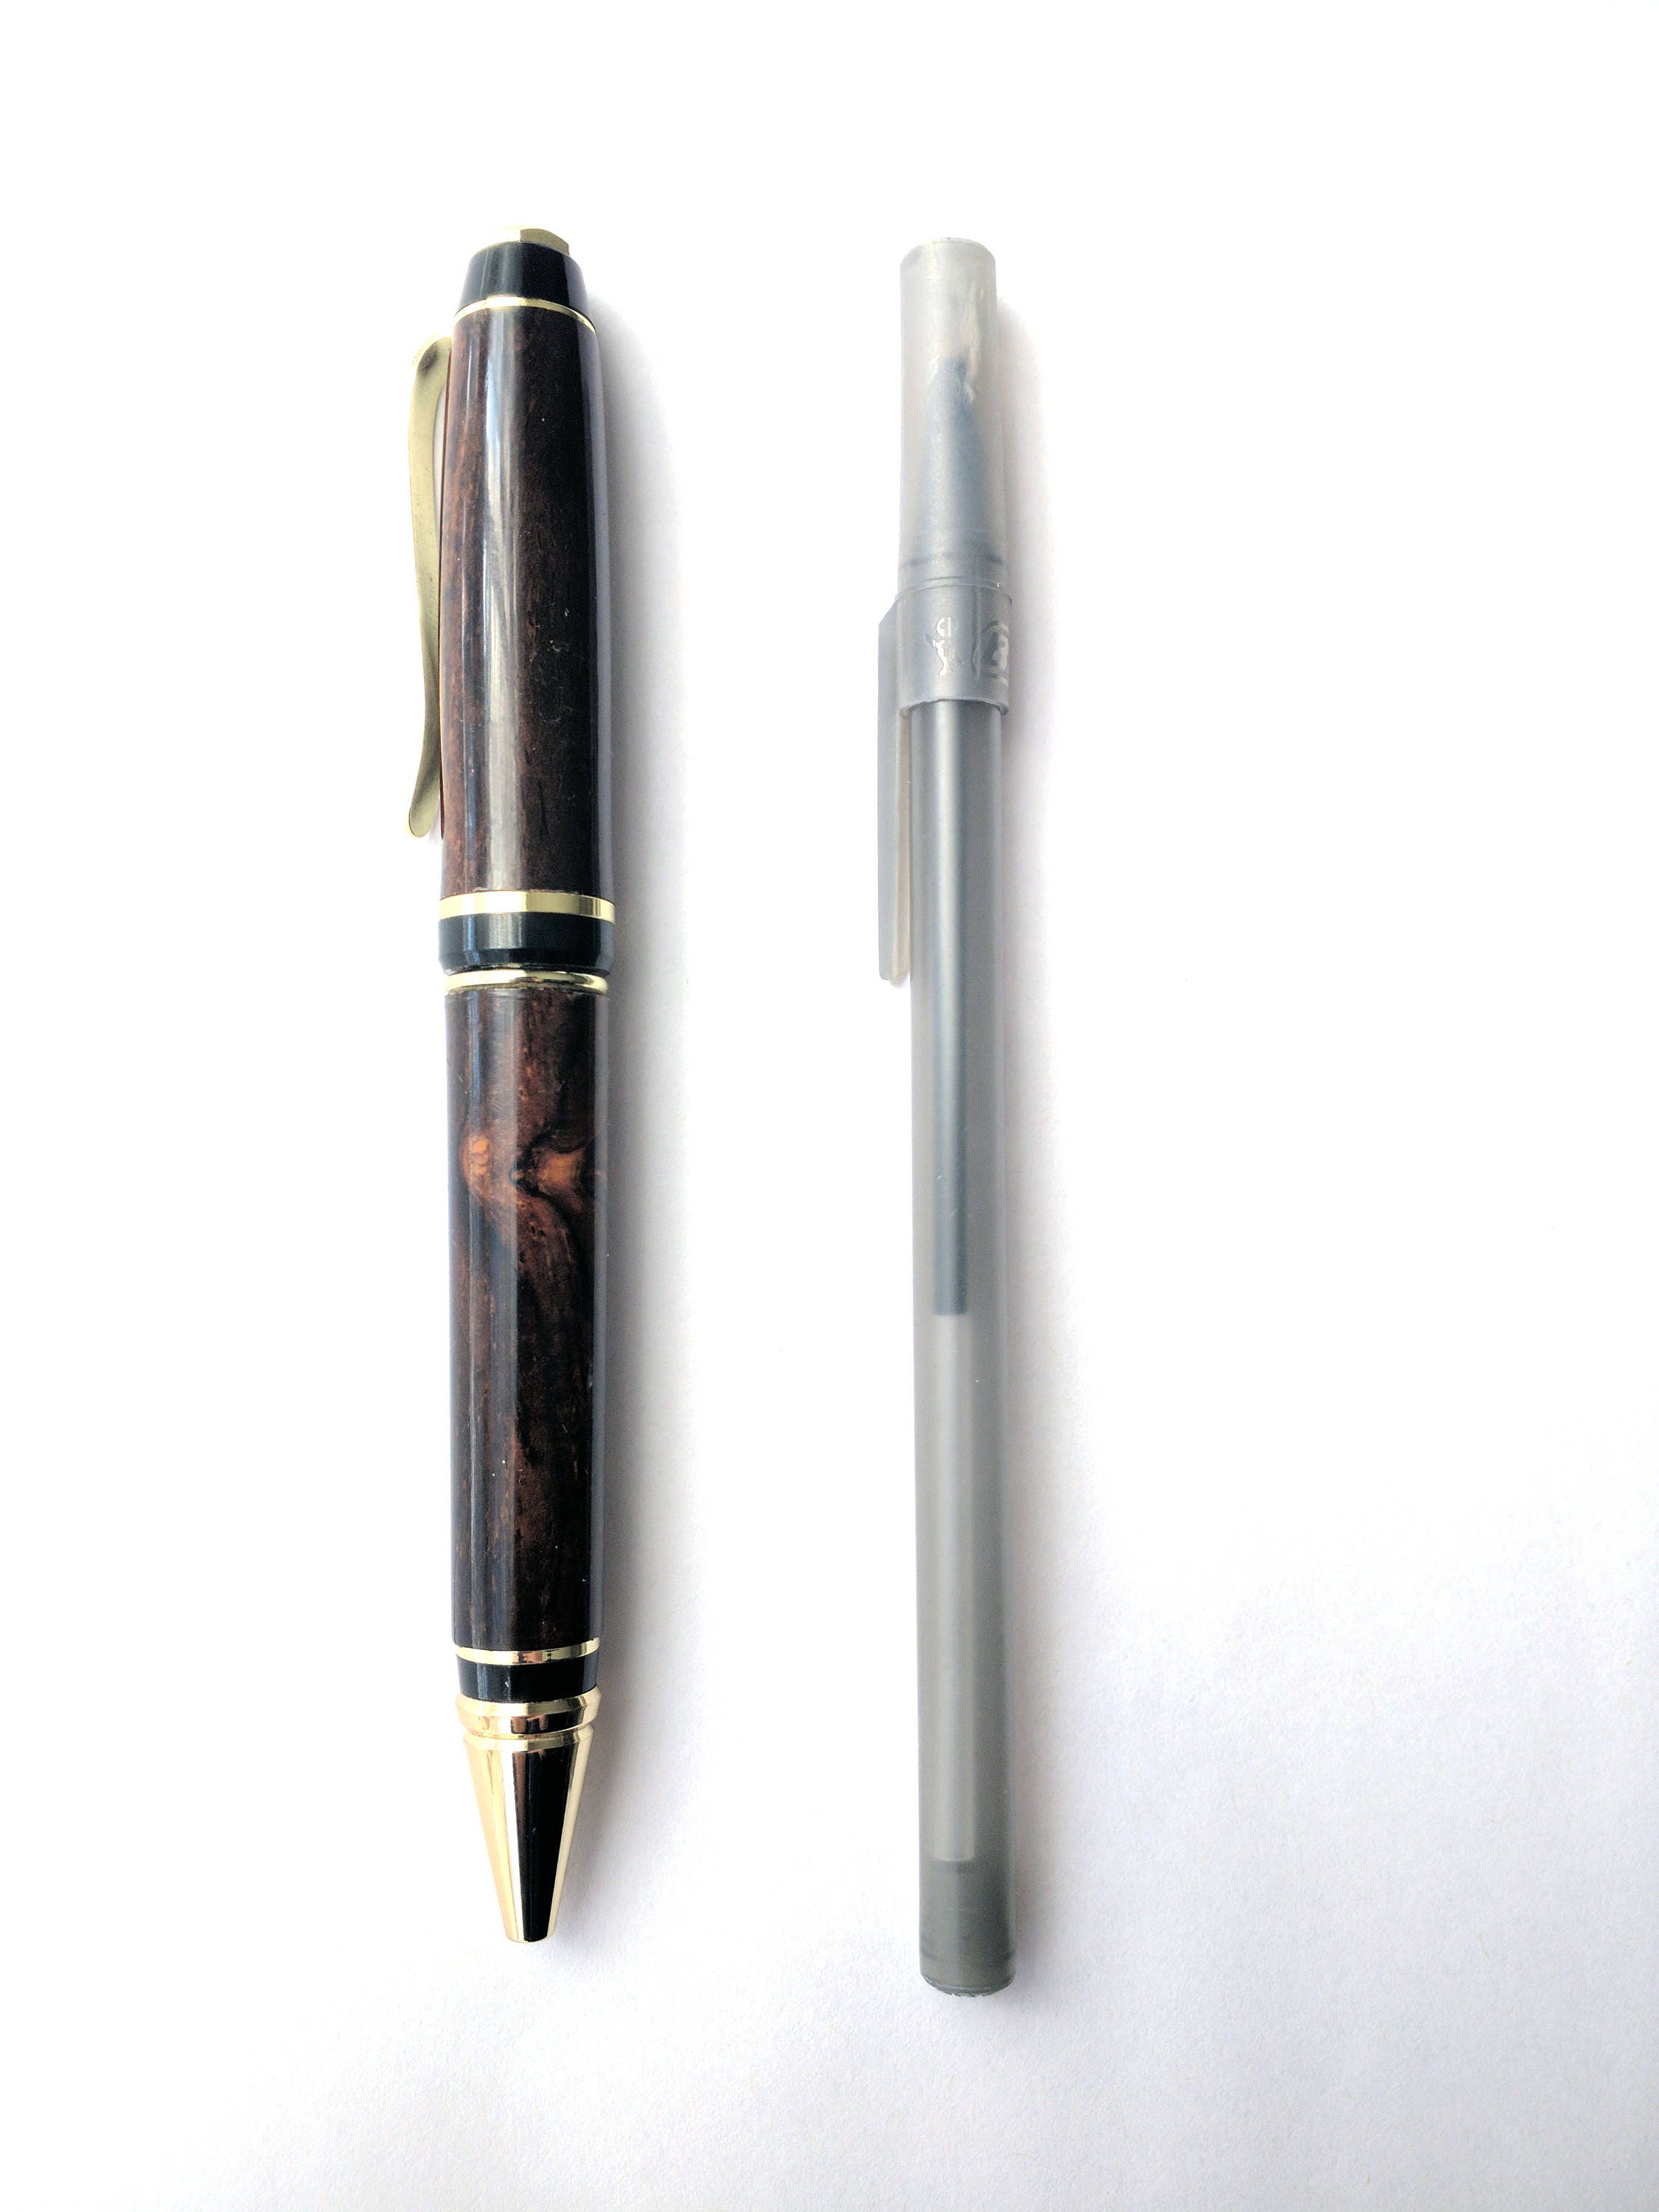 Designer Twist Pen, Handmade Pen, Wood Pen, Wooden Pen, Custom Pen,  Personalized Pen, Graduation Gift 